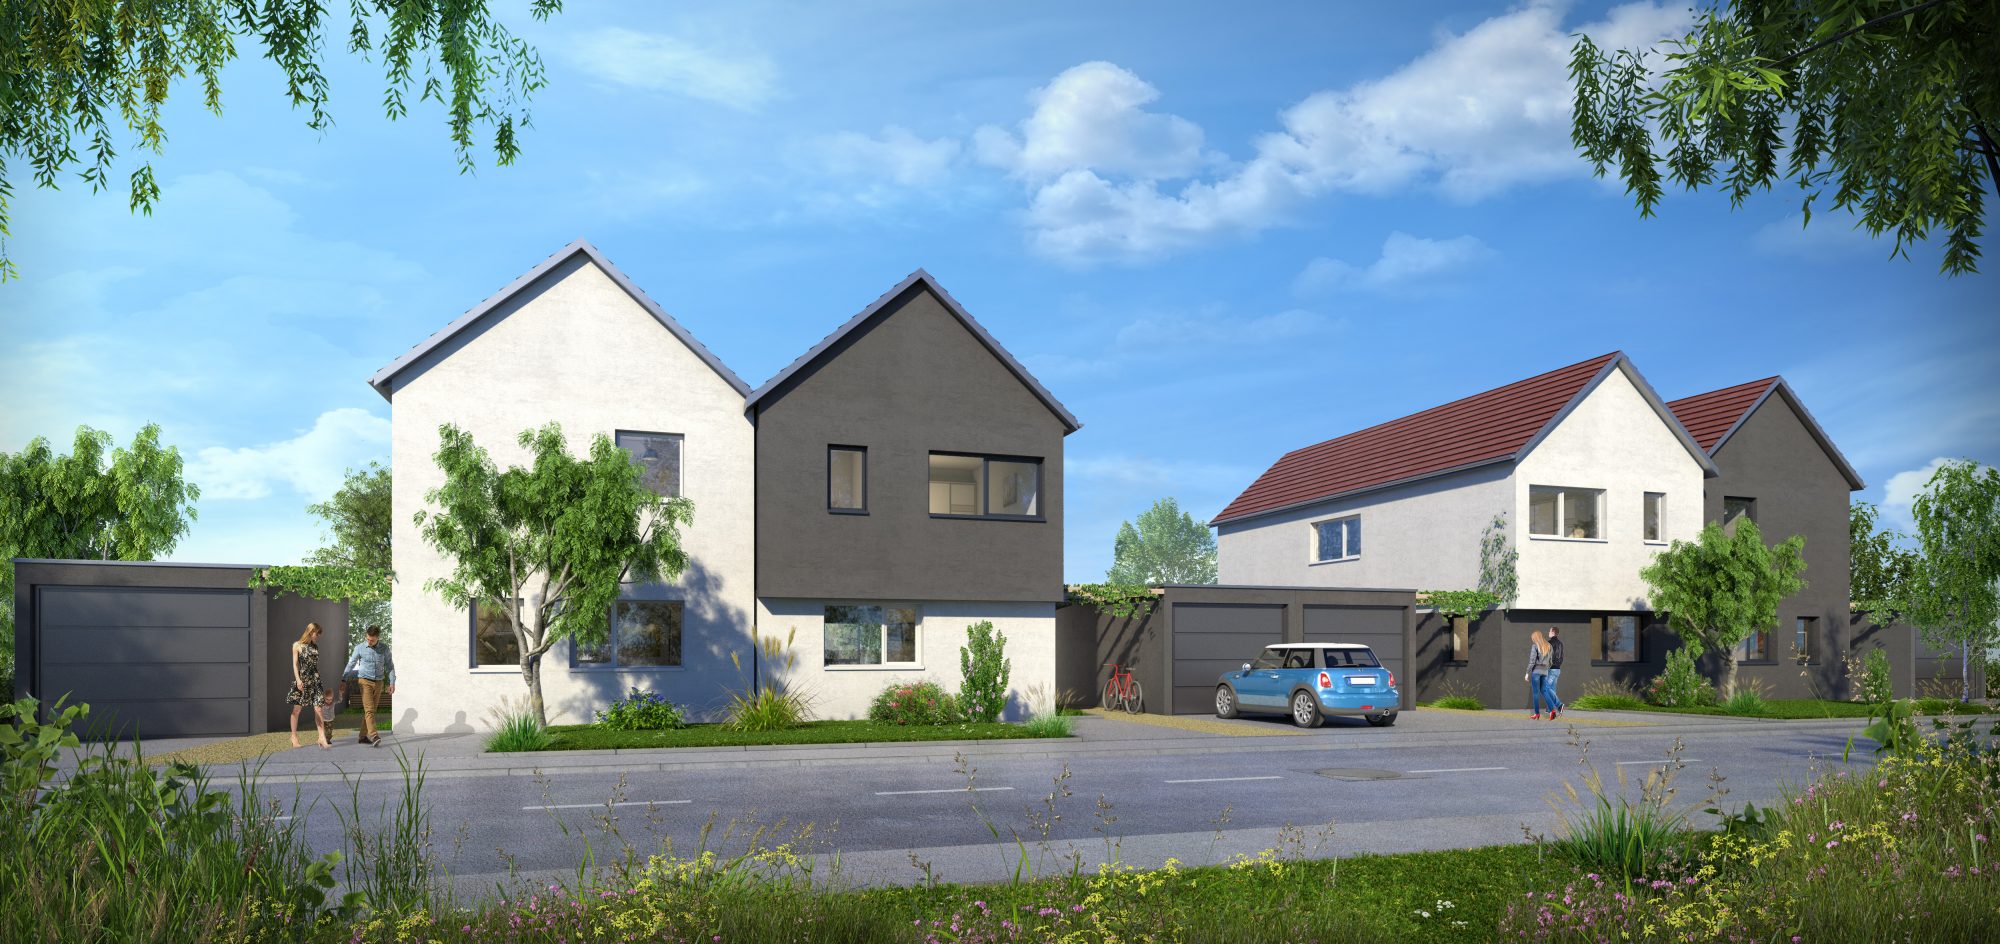 Vente Maison 107m² 4 Pièces à Ernolsheim-Bruche (67120) - Origami